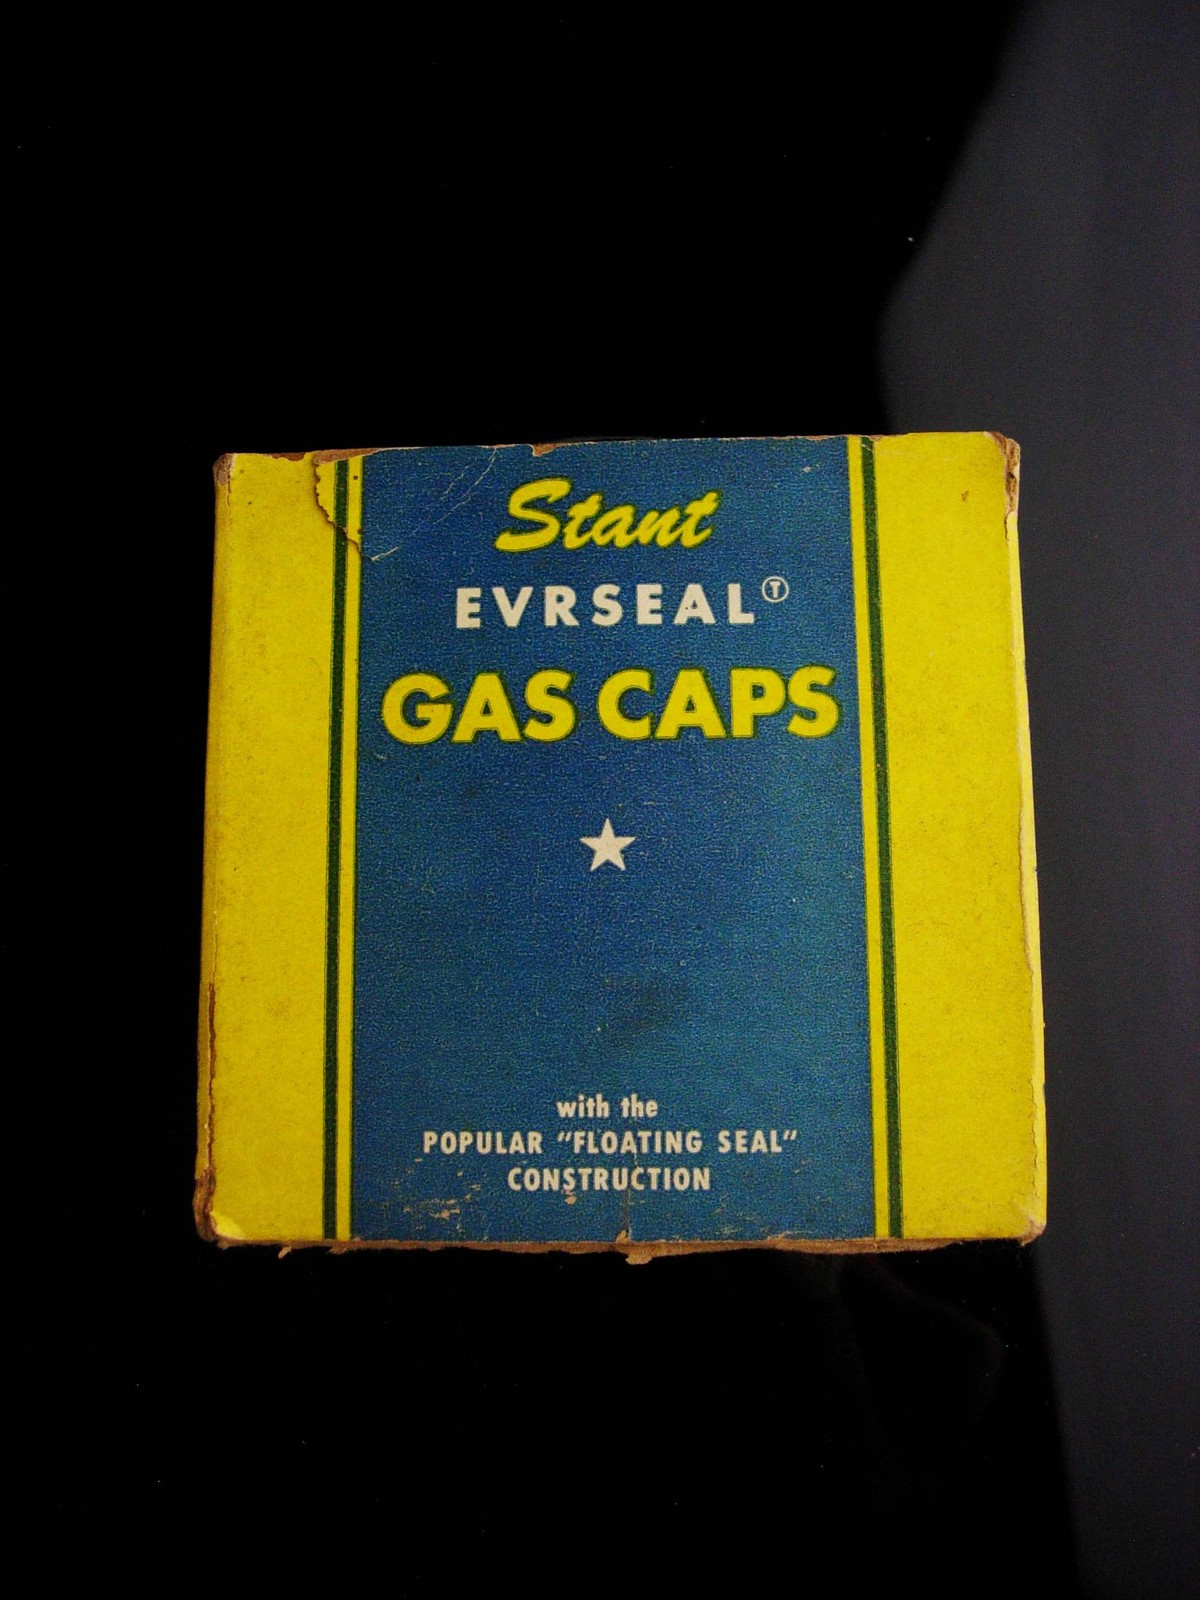 NOS Stant G-22 evrseal Gas Cap 1953 - 1954 - vintage car part - Chrysler DeSoto  - $30.00